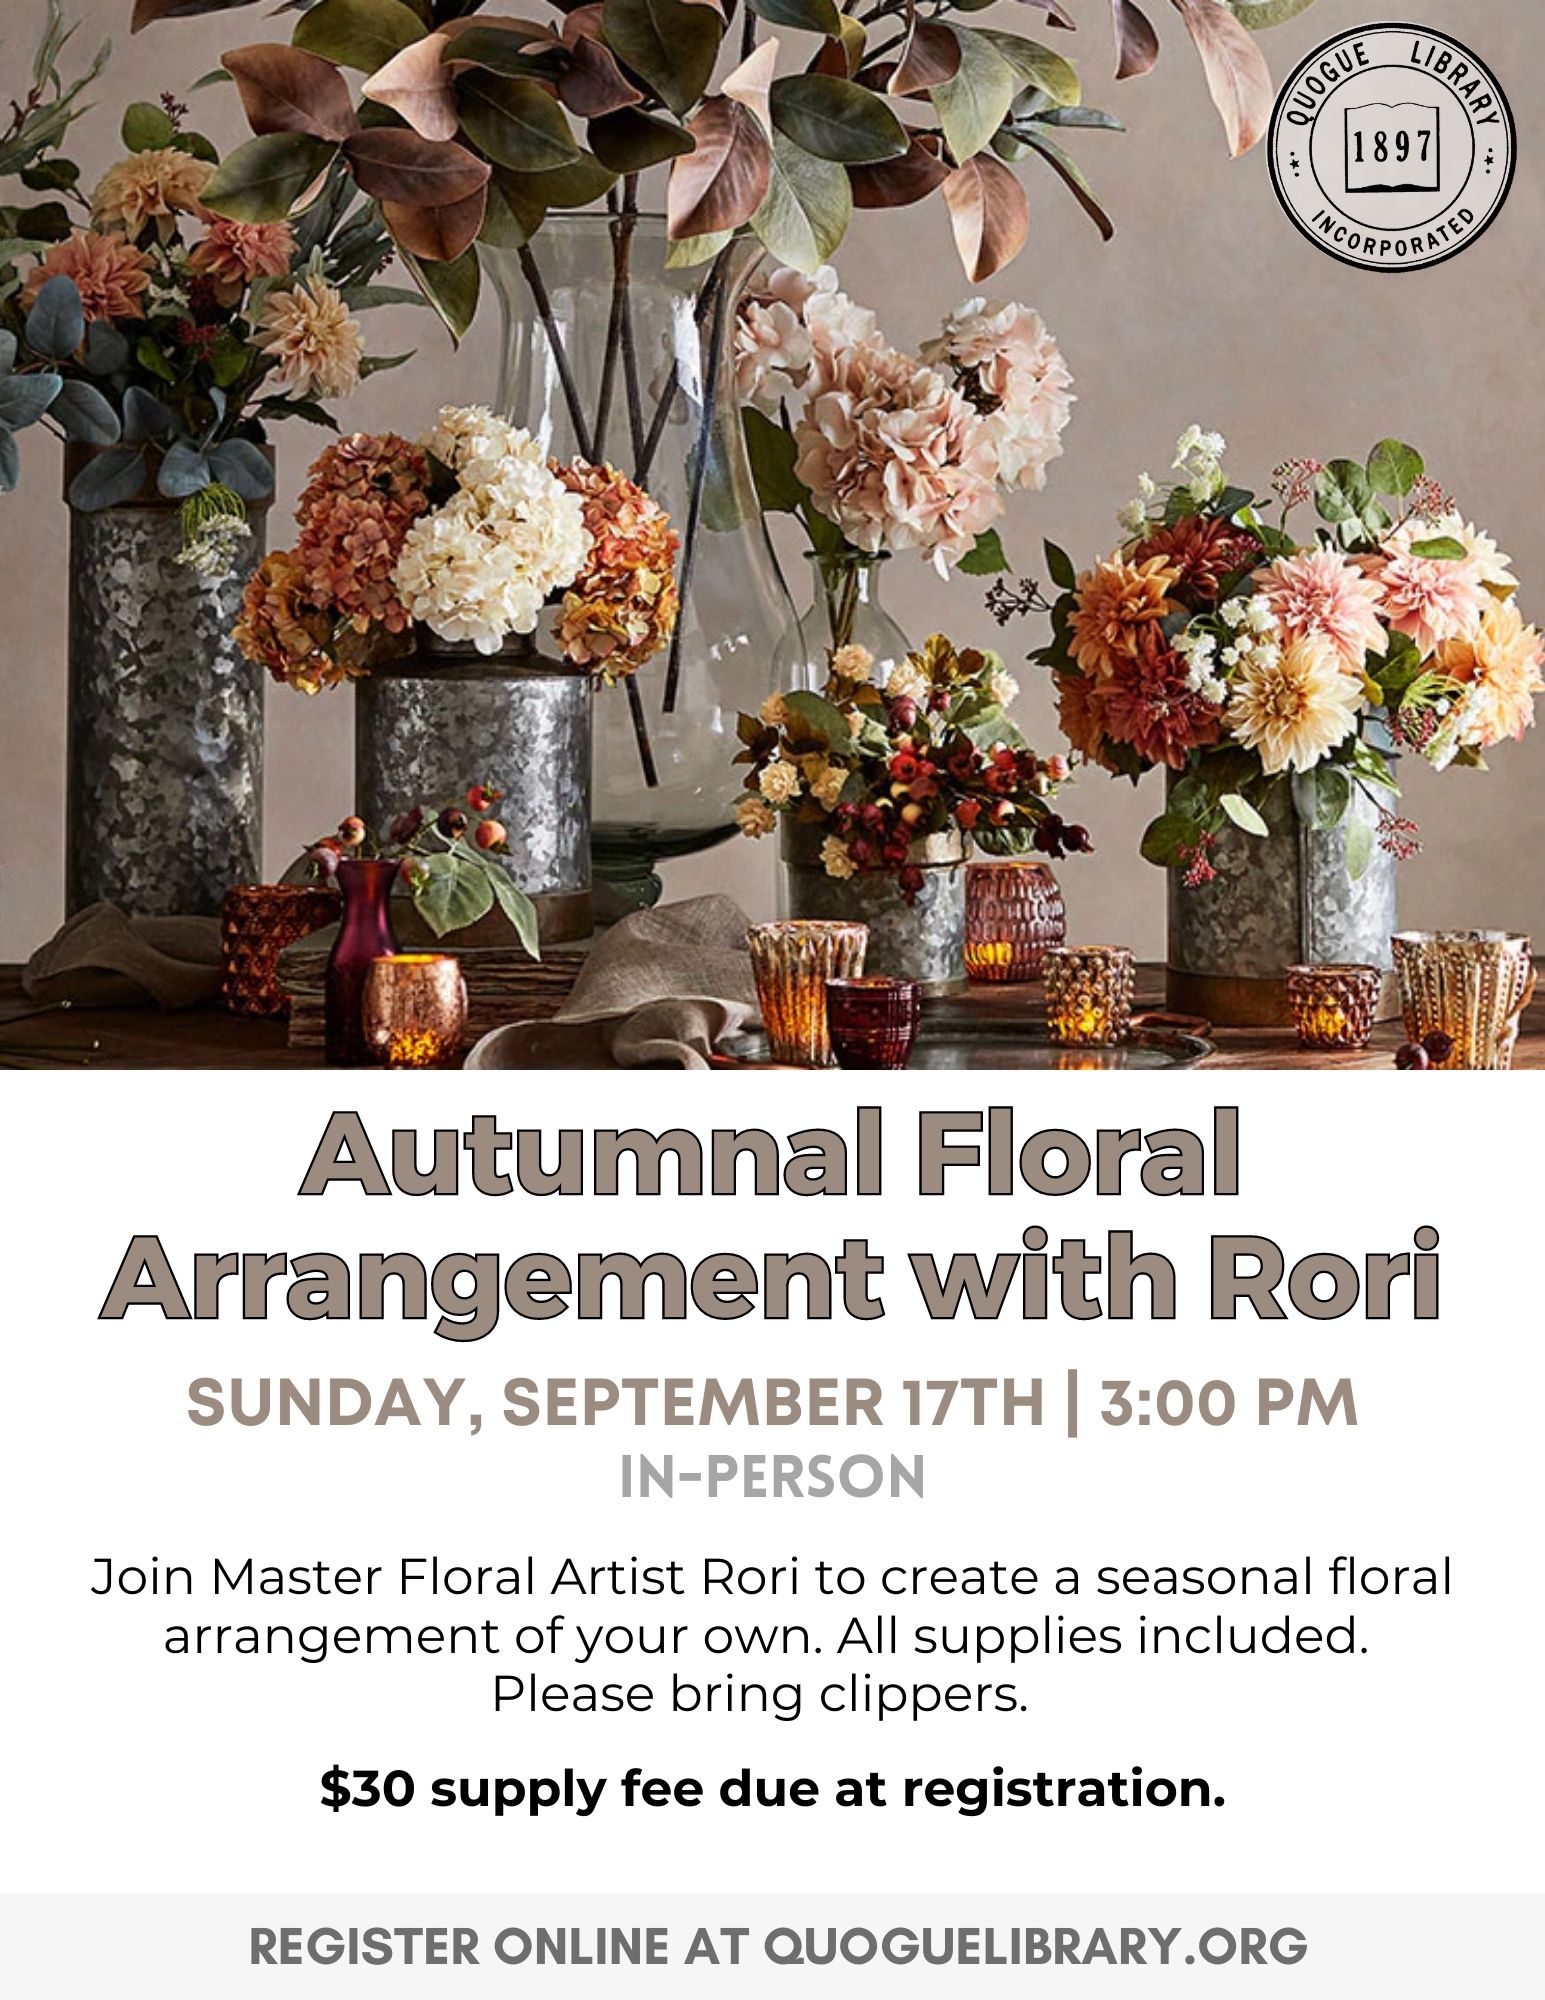 Autumnal Floral Arrangement with Rori